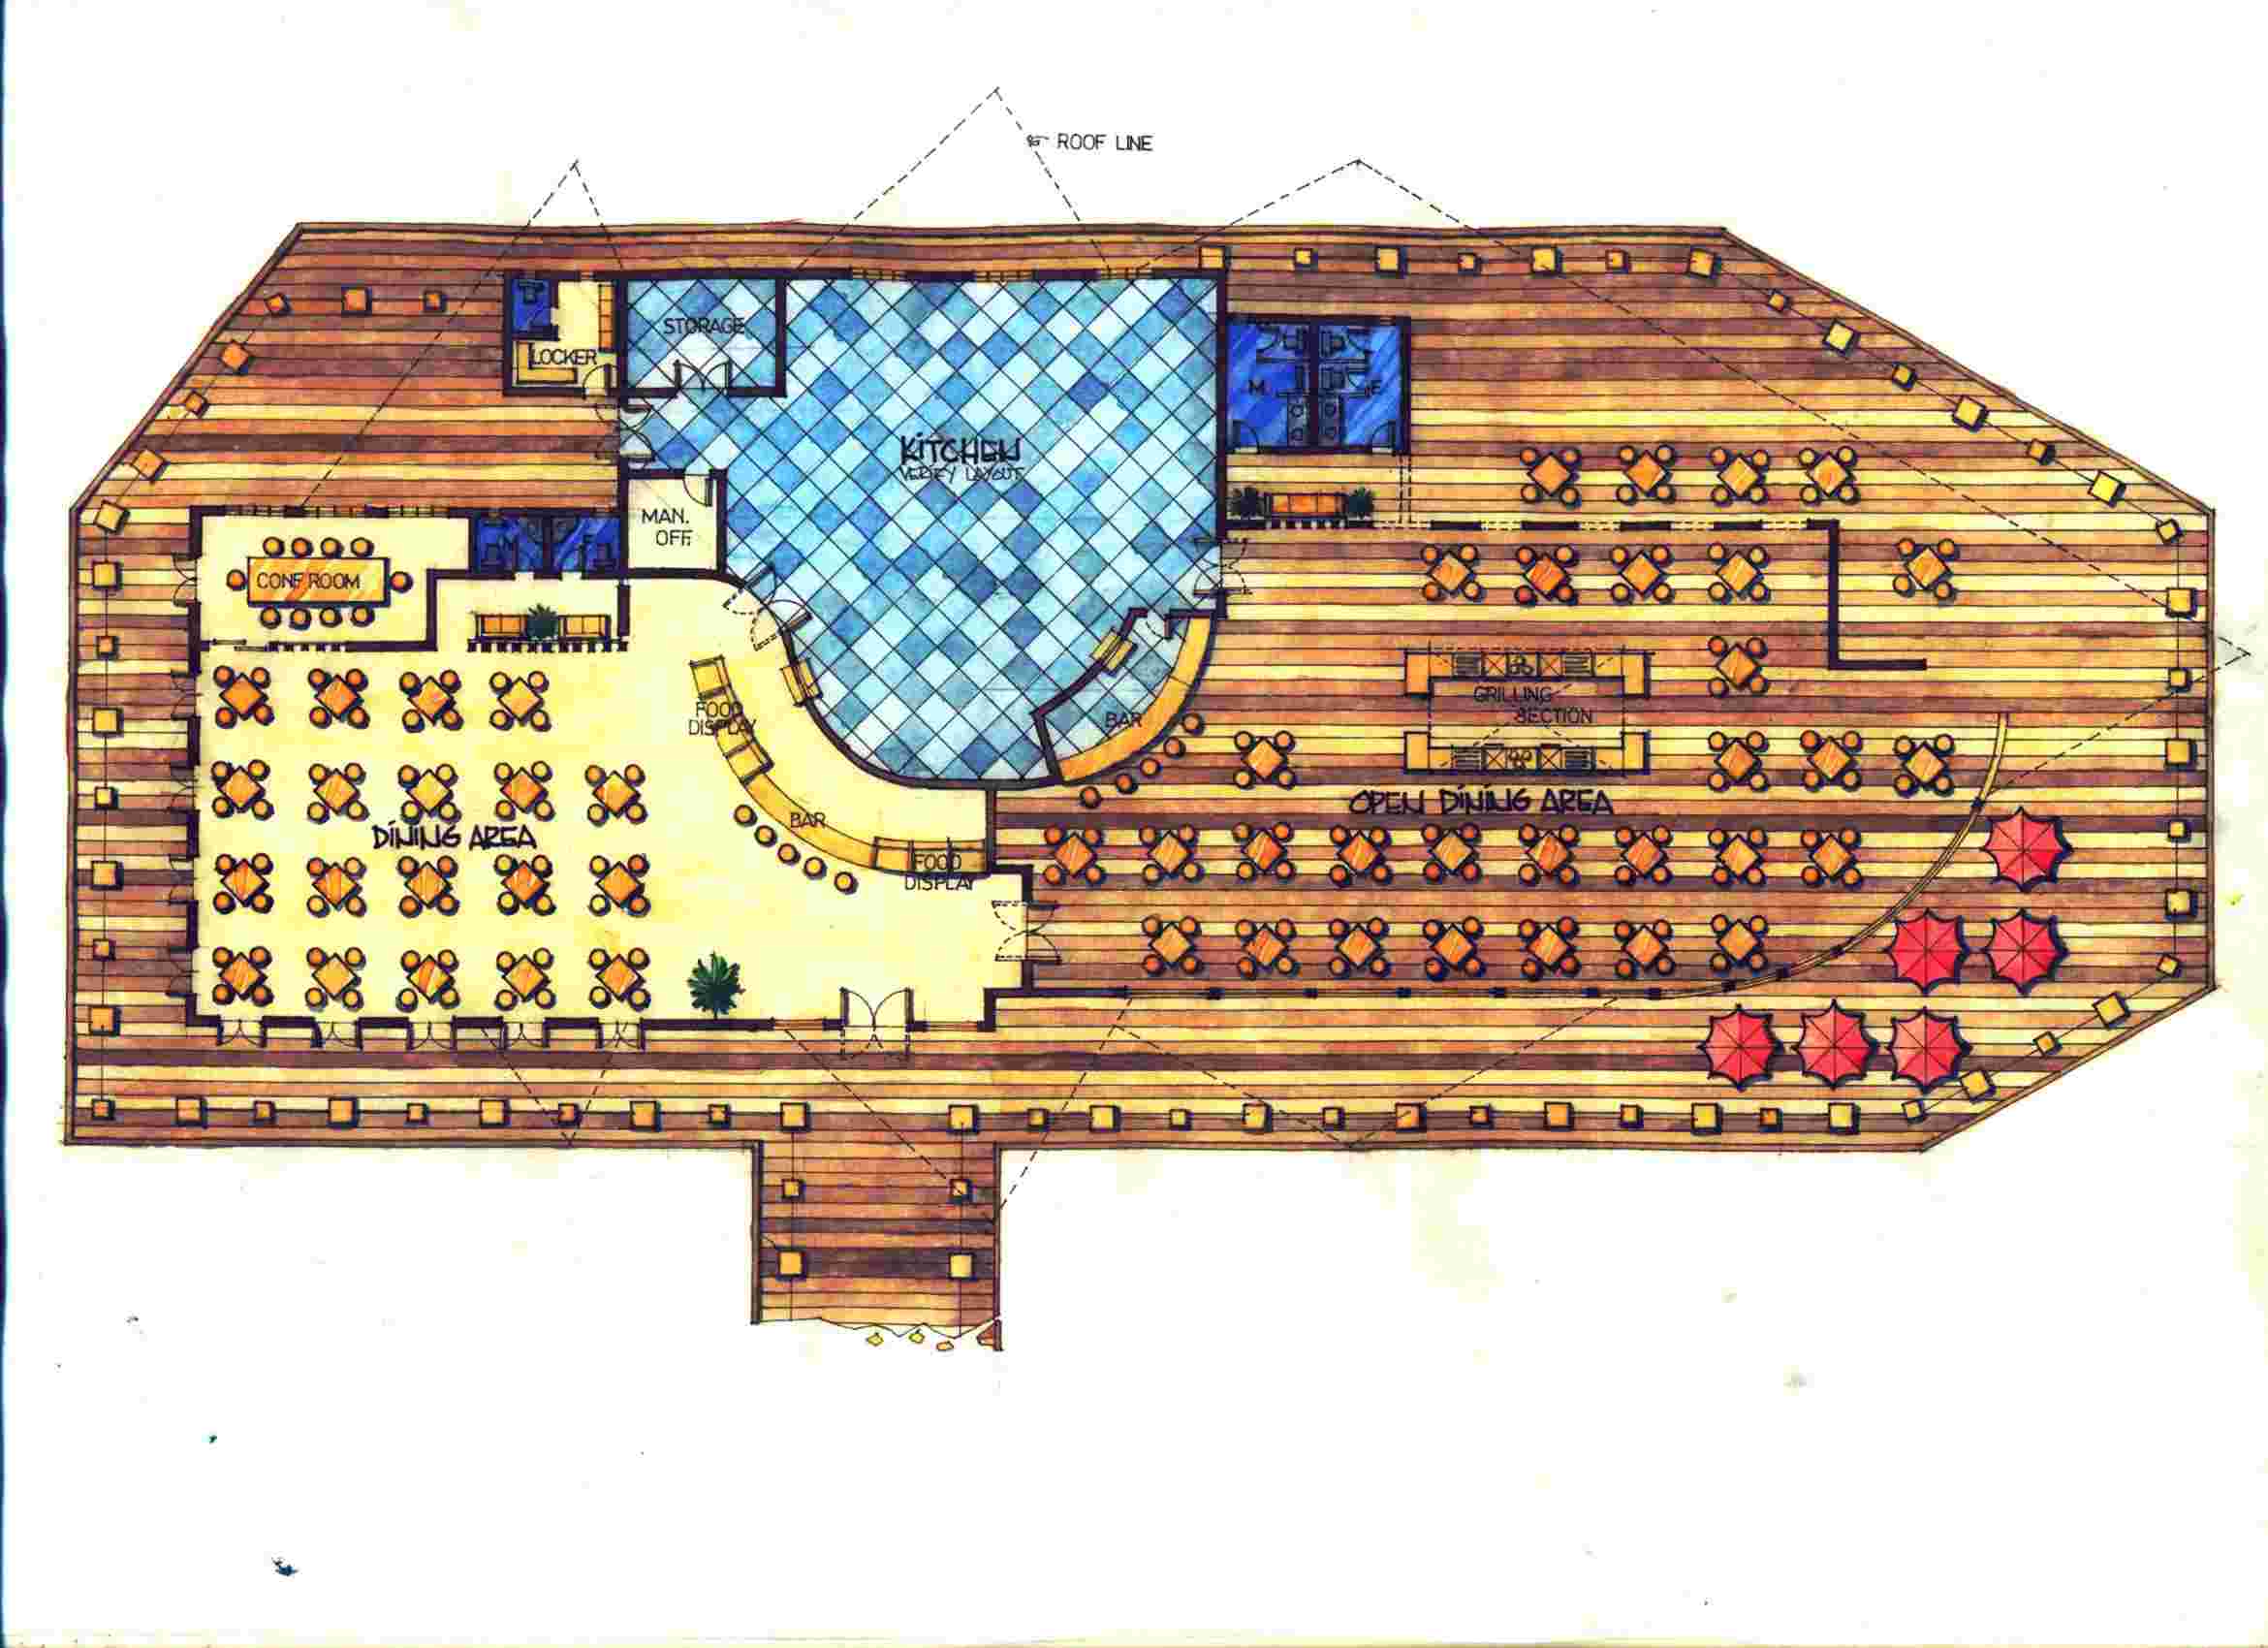 Resto Bar Floorplan By Architect Jong On Deviantart